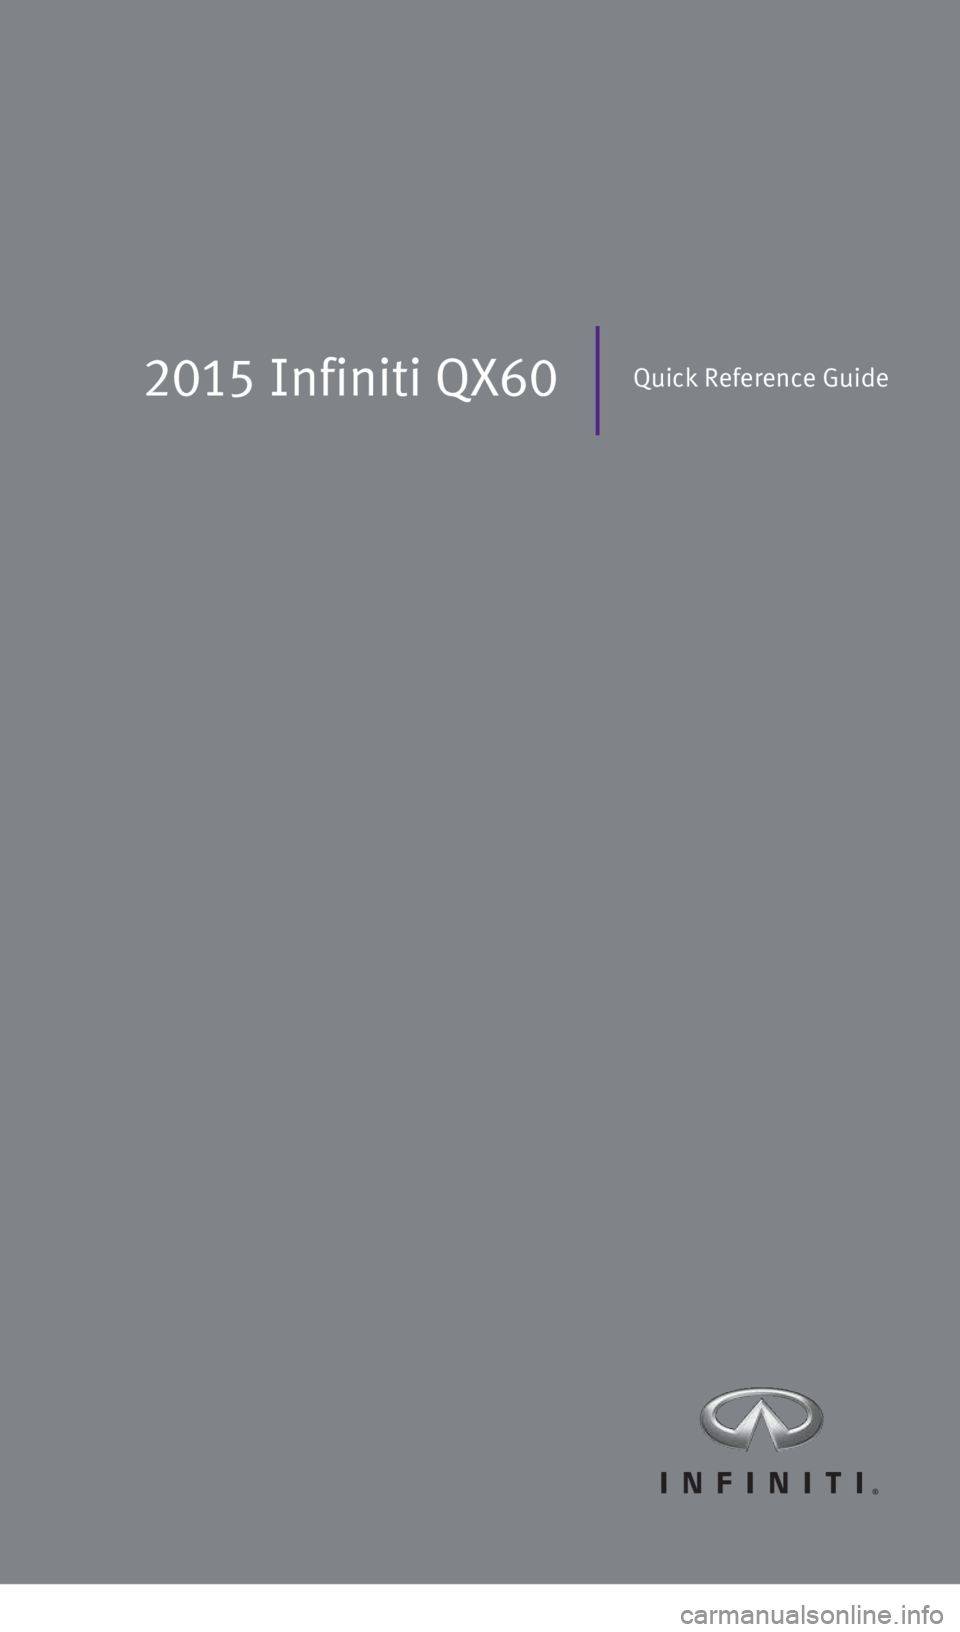 INFINITI QX60 2015  Quick Reference Guide 2015 Infiniti QX60Quick Reference Guide
1923535_15c_Infiniti_QX60_QRG_061815.indd   36/18/15   2:15 PM 